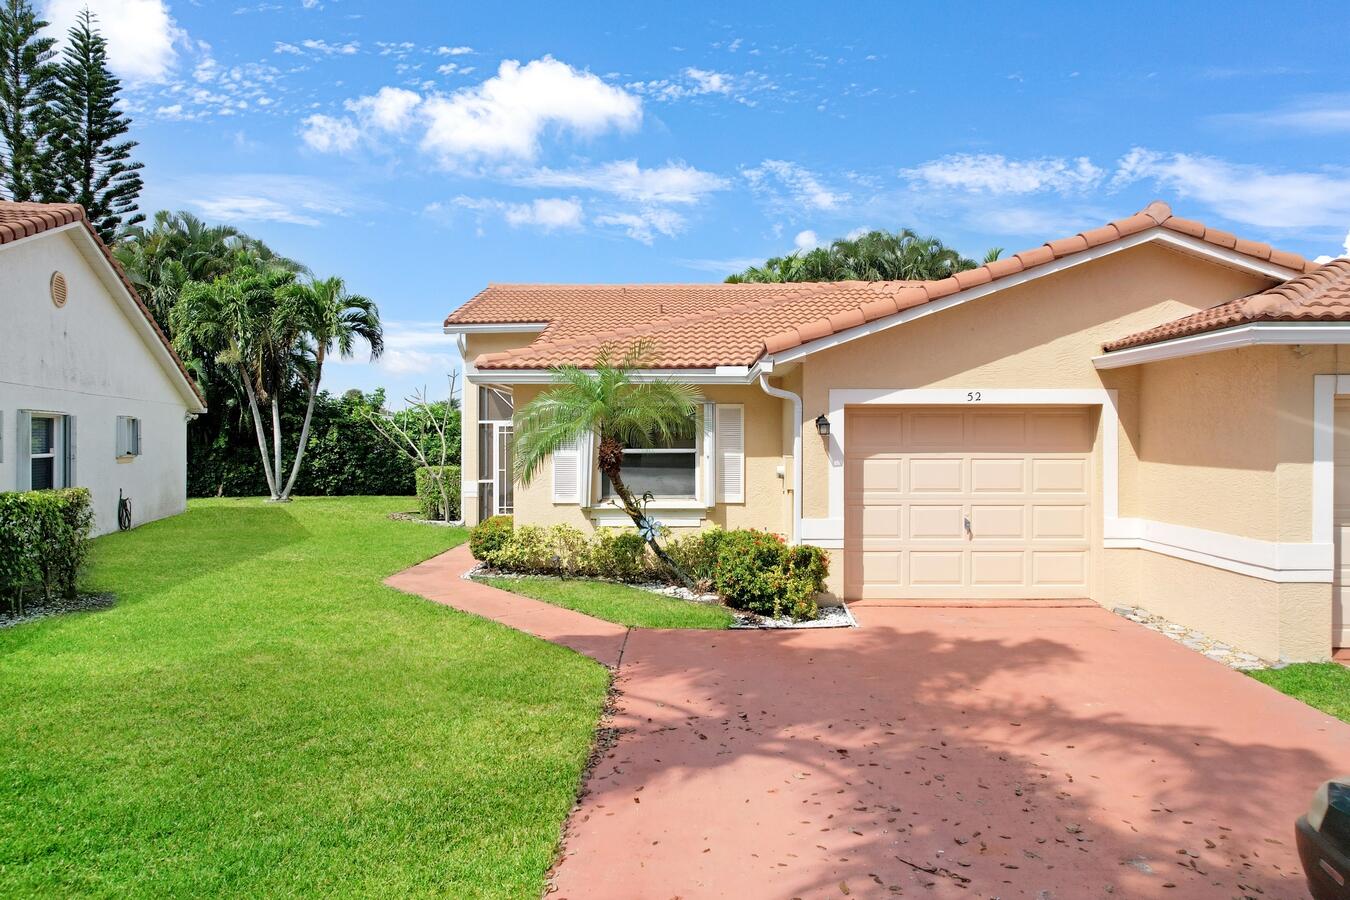 Property for Sale at 52 Sausalito Drive, Boynton Beach, Palm Beach County, Florida - Bedrooms: 2 
Bathrooms: 2  - $310,000